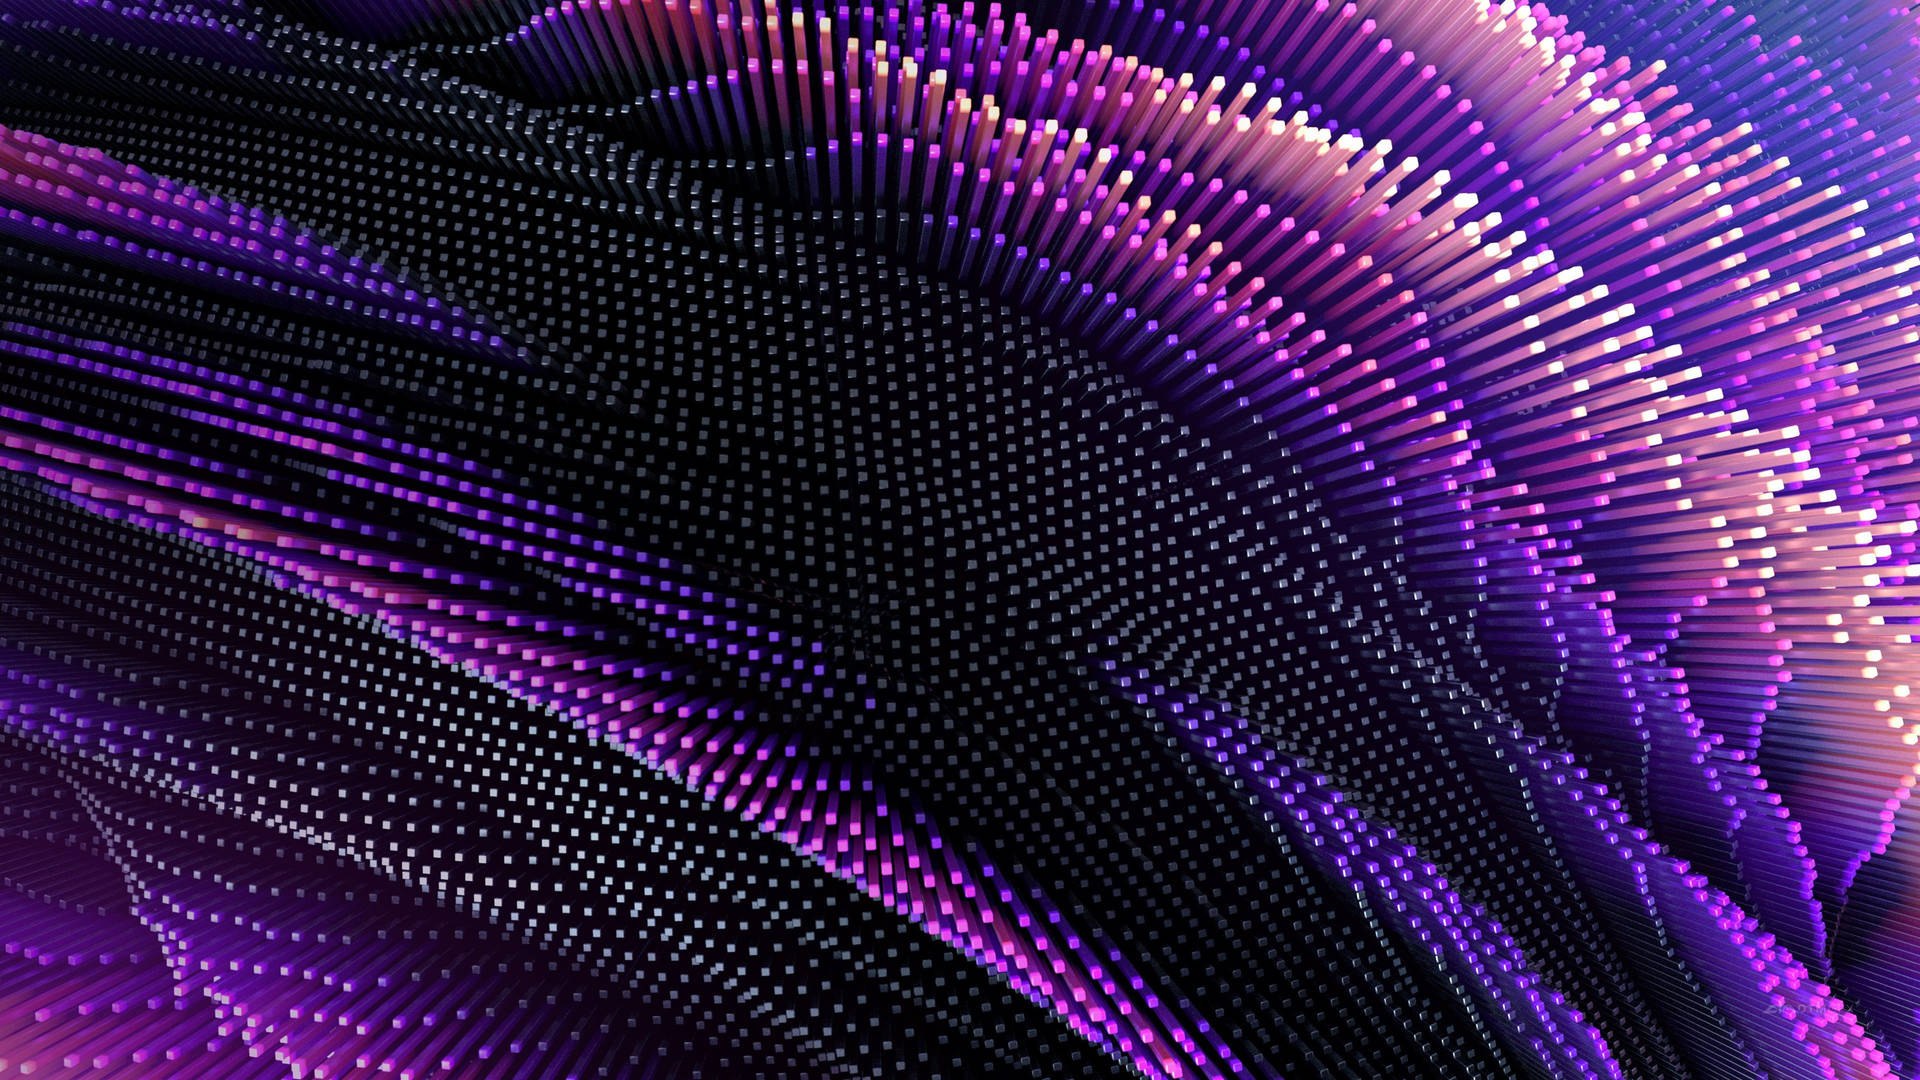 Brilhantee Ousado, O Neon Purple Oferece Uma Tonalidade Vívida Que Se Destaca. Papel de Parede